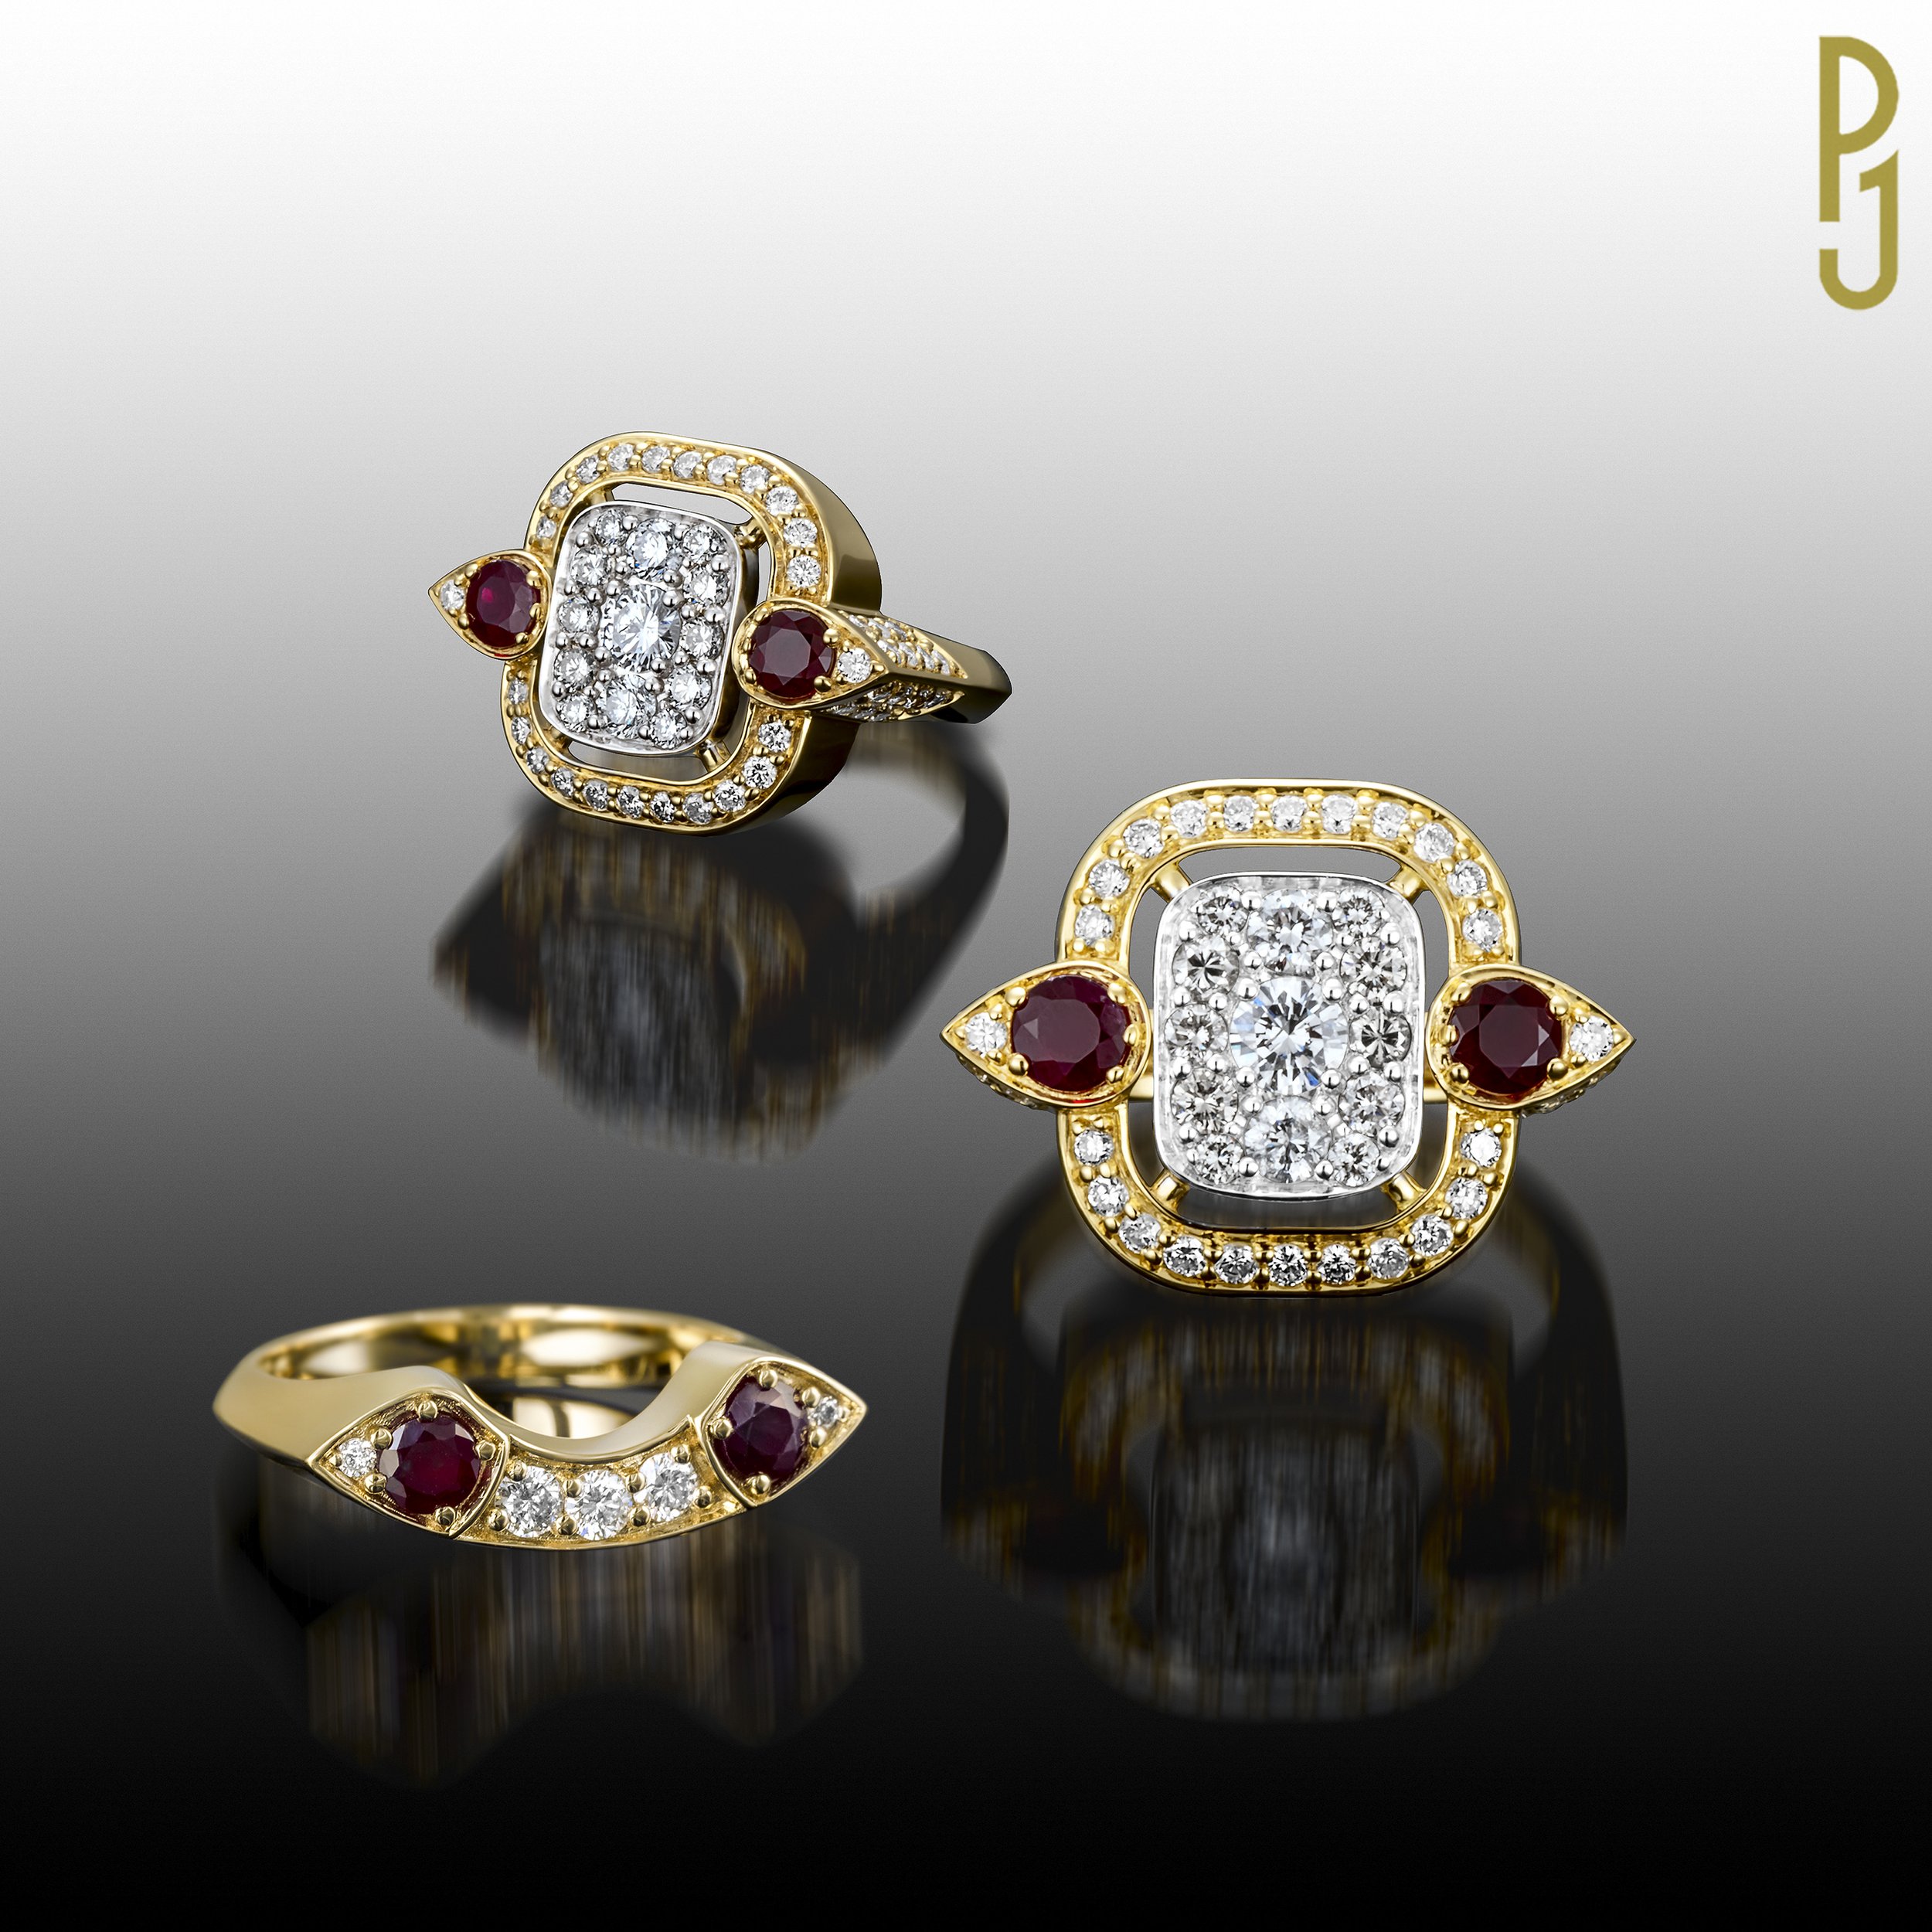 Custom Design Matching Engagement & Wedding Rings Philip's Jewellery Mackay.jpg